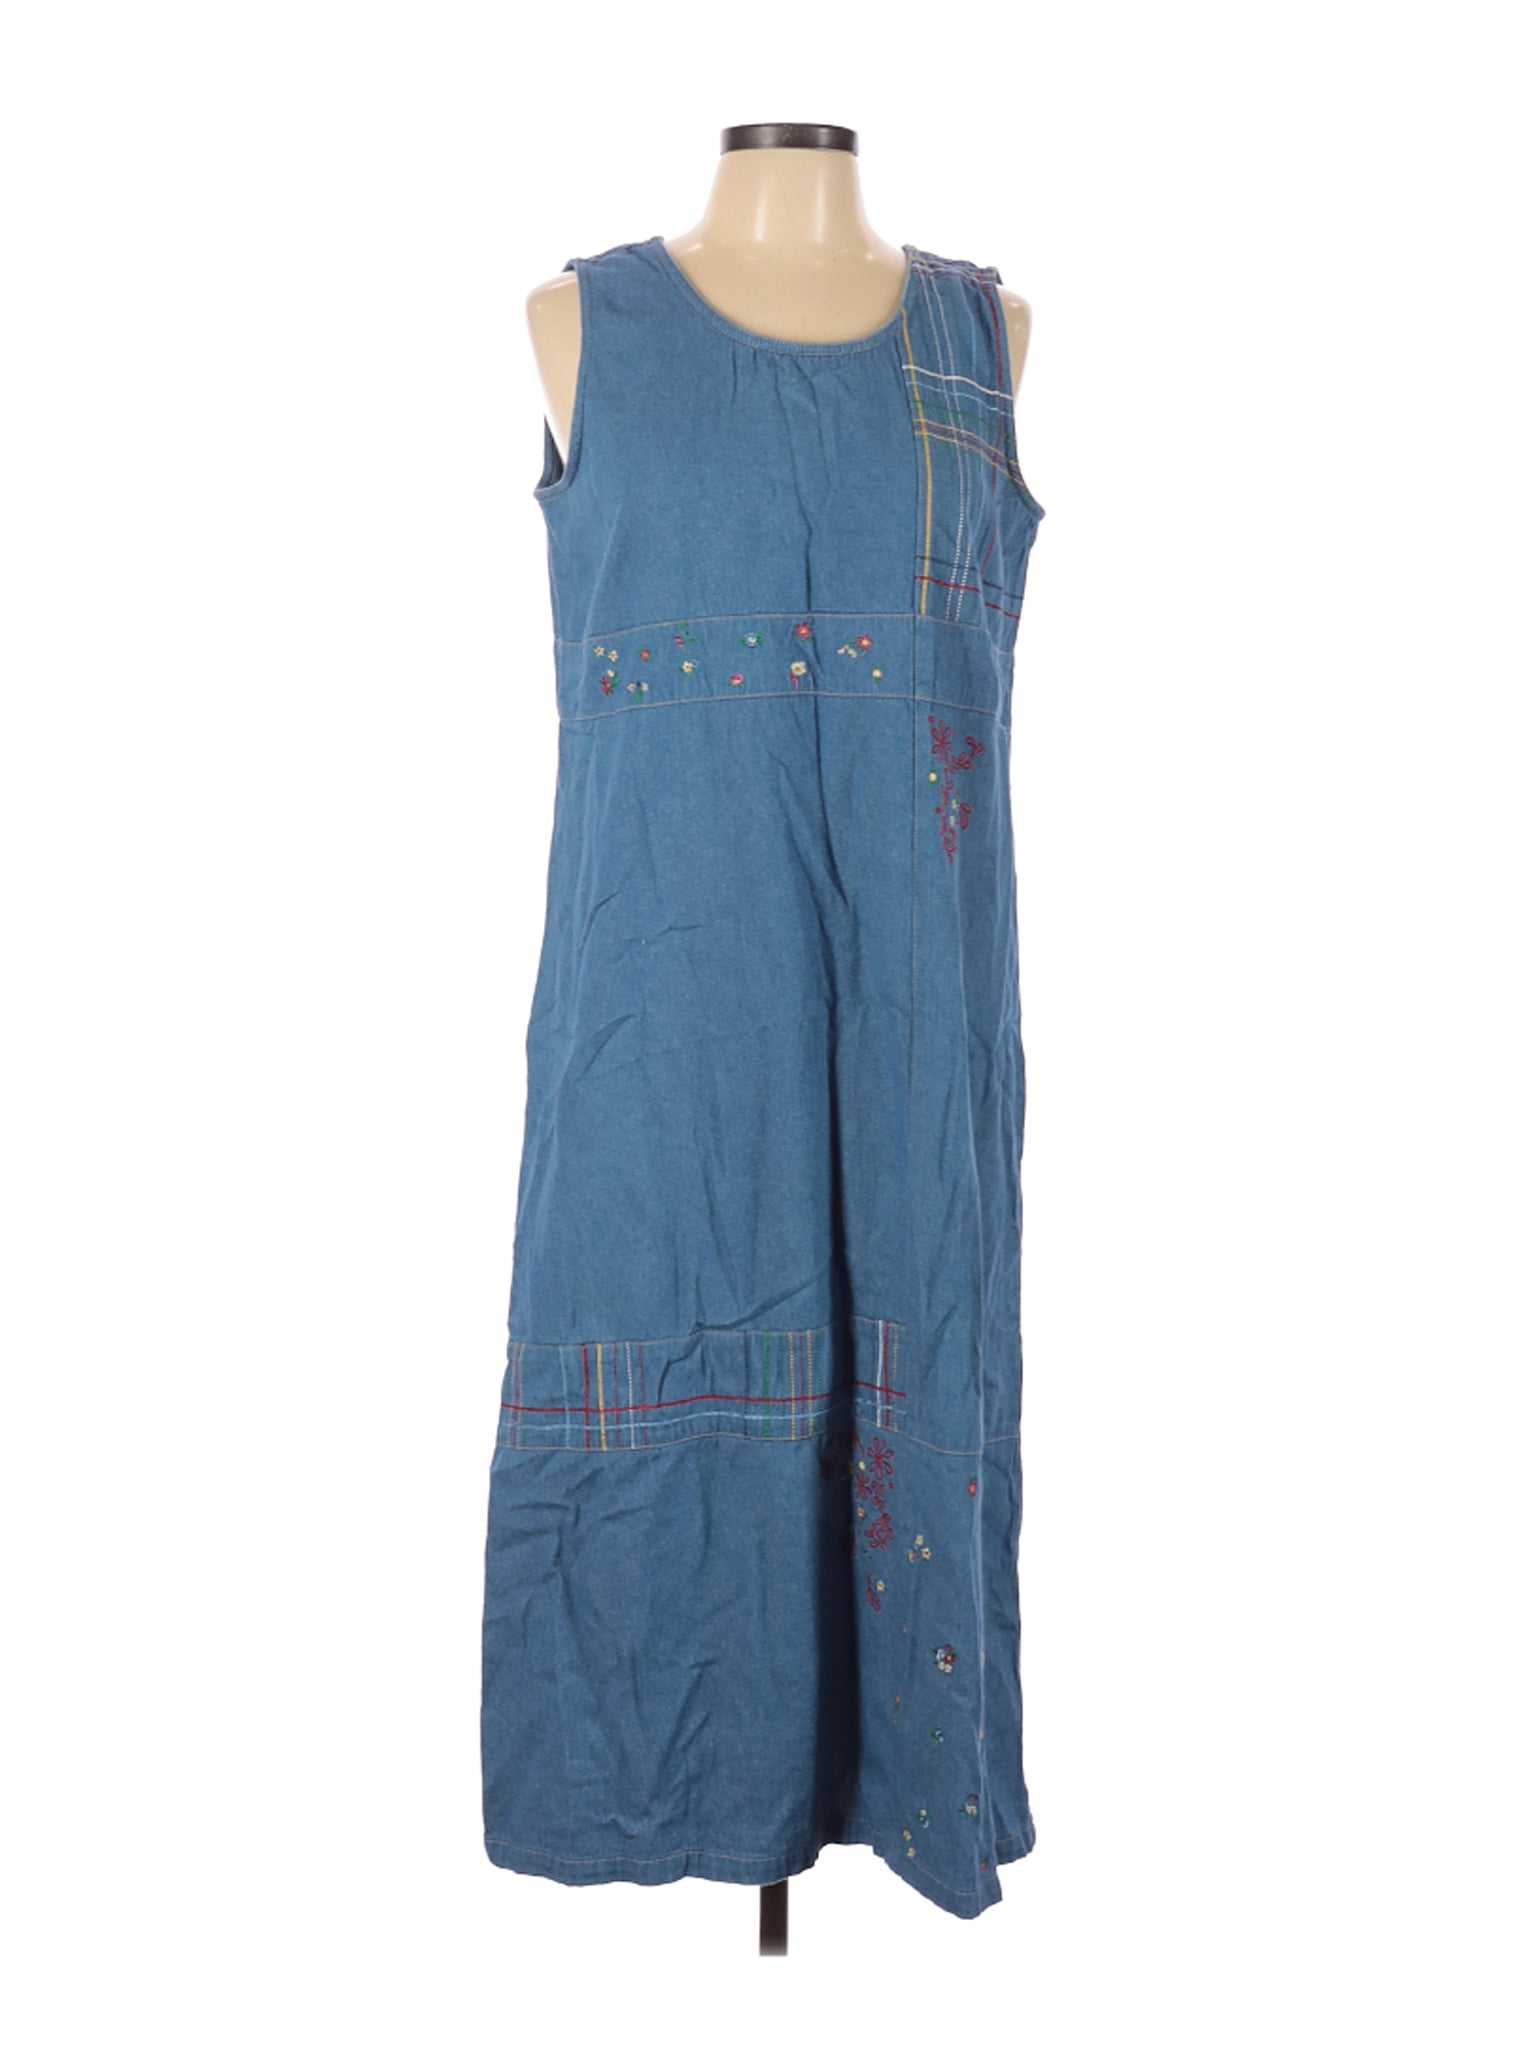 Koret - Pre-Owned Koret Women's Size L Casual Dress - Walmart.com ...